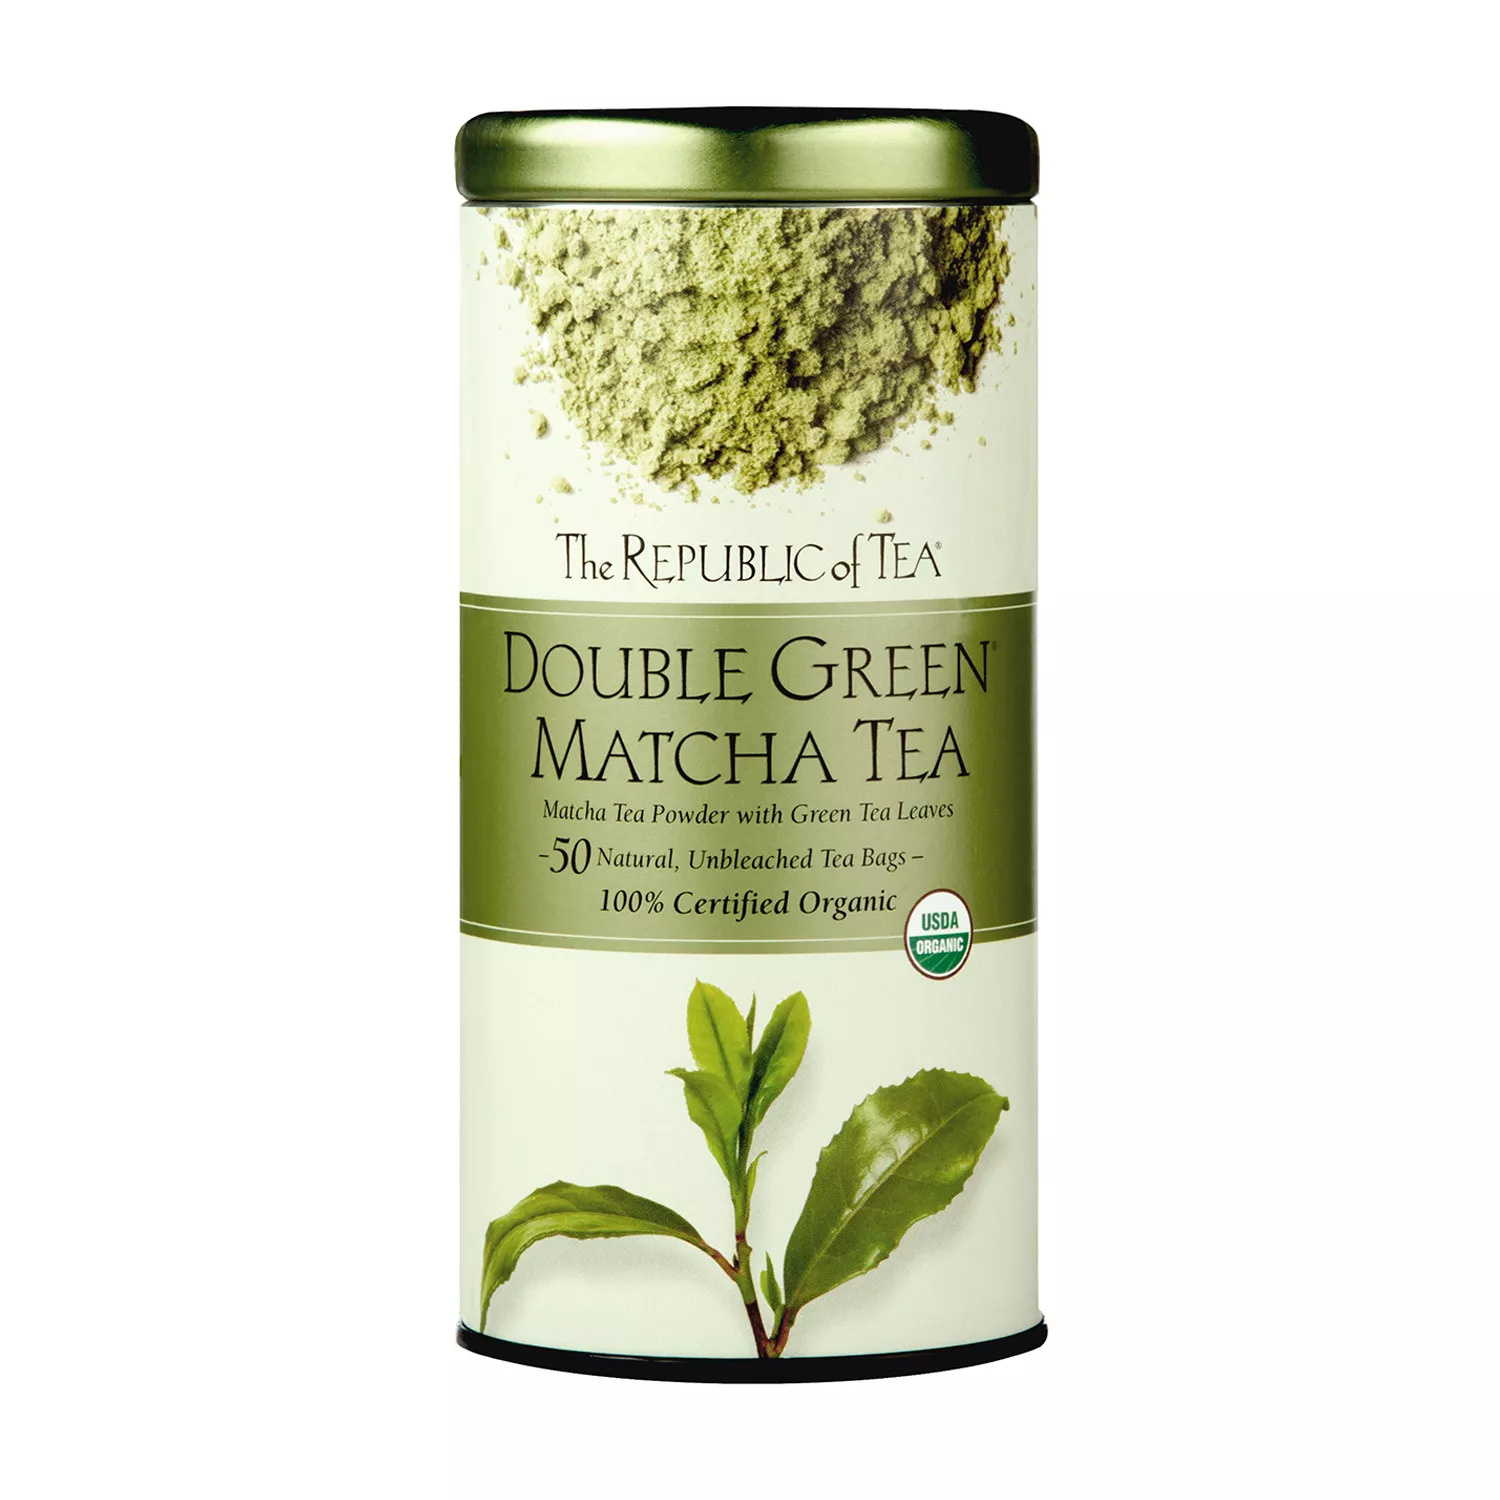 The Republic of Tea Double Green Matcha Tea